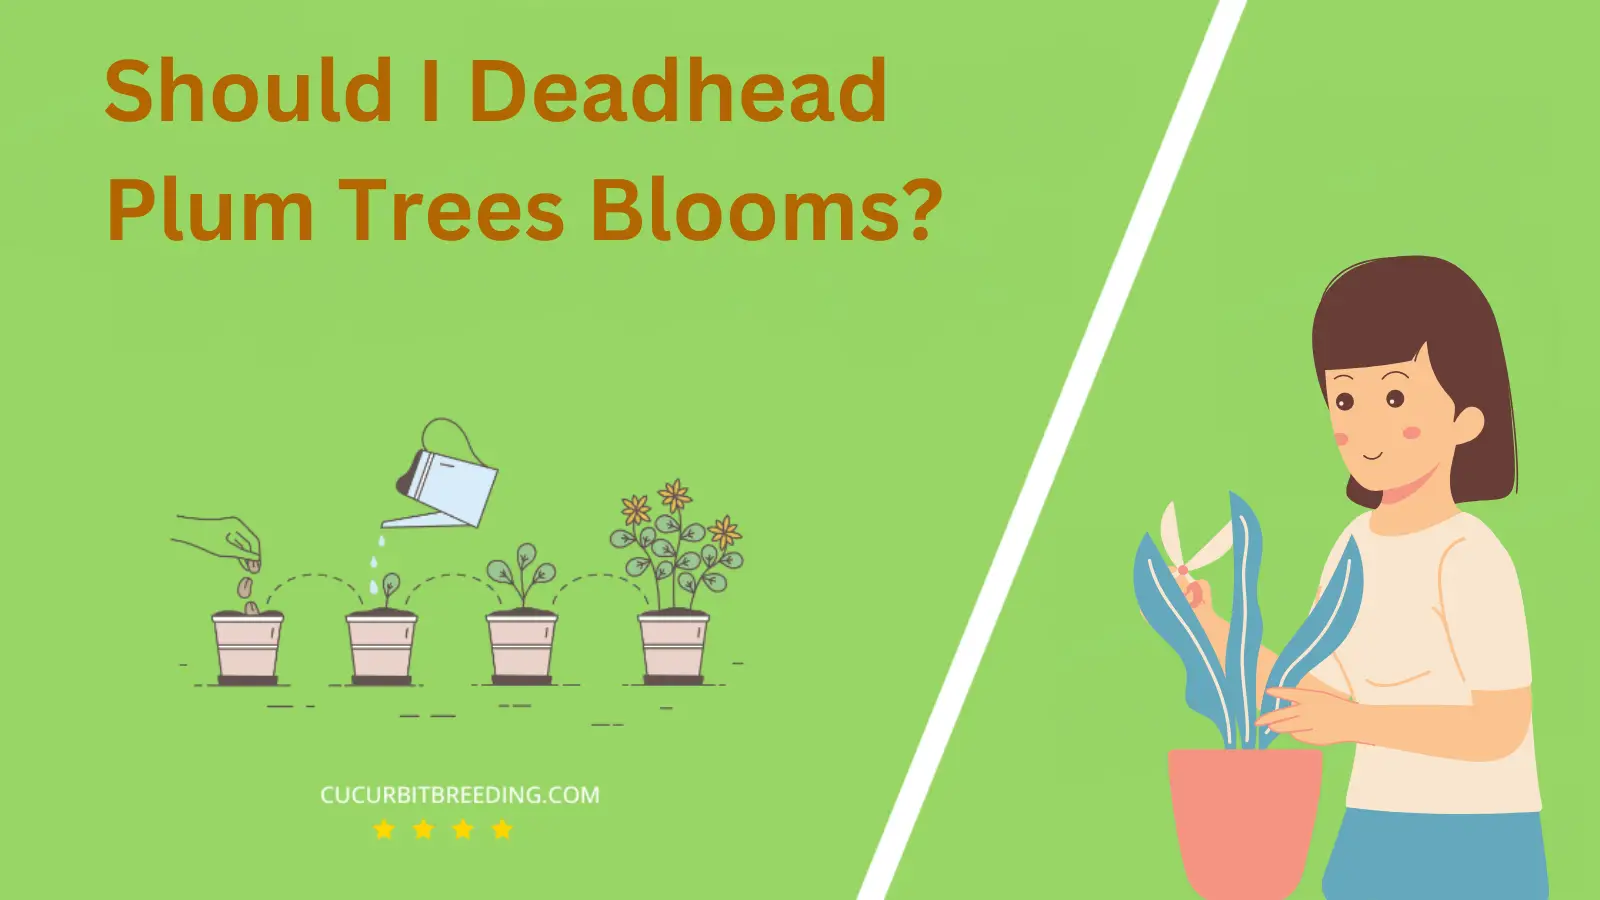 Should I Deadhead Plum Trees Blooms?